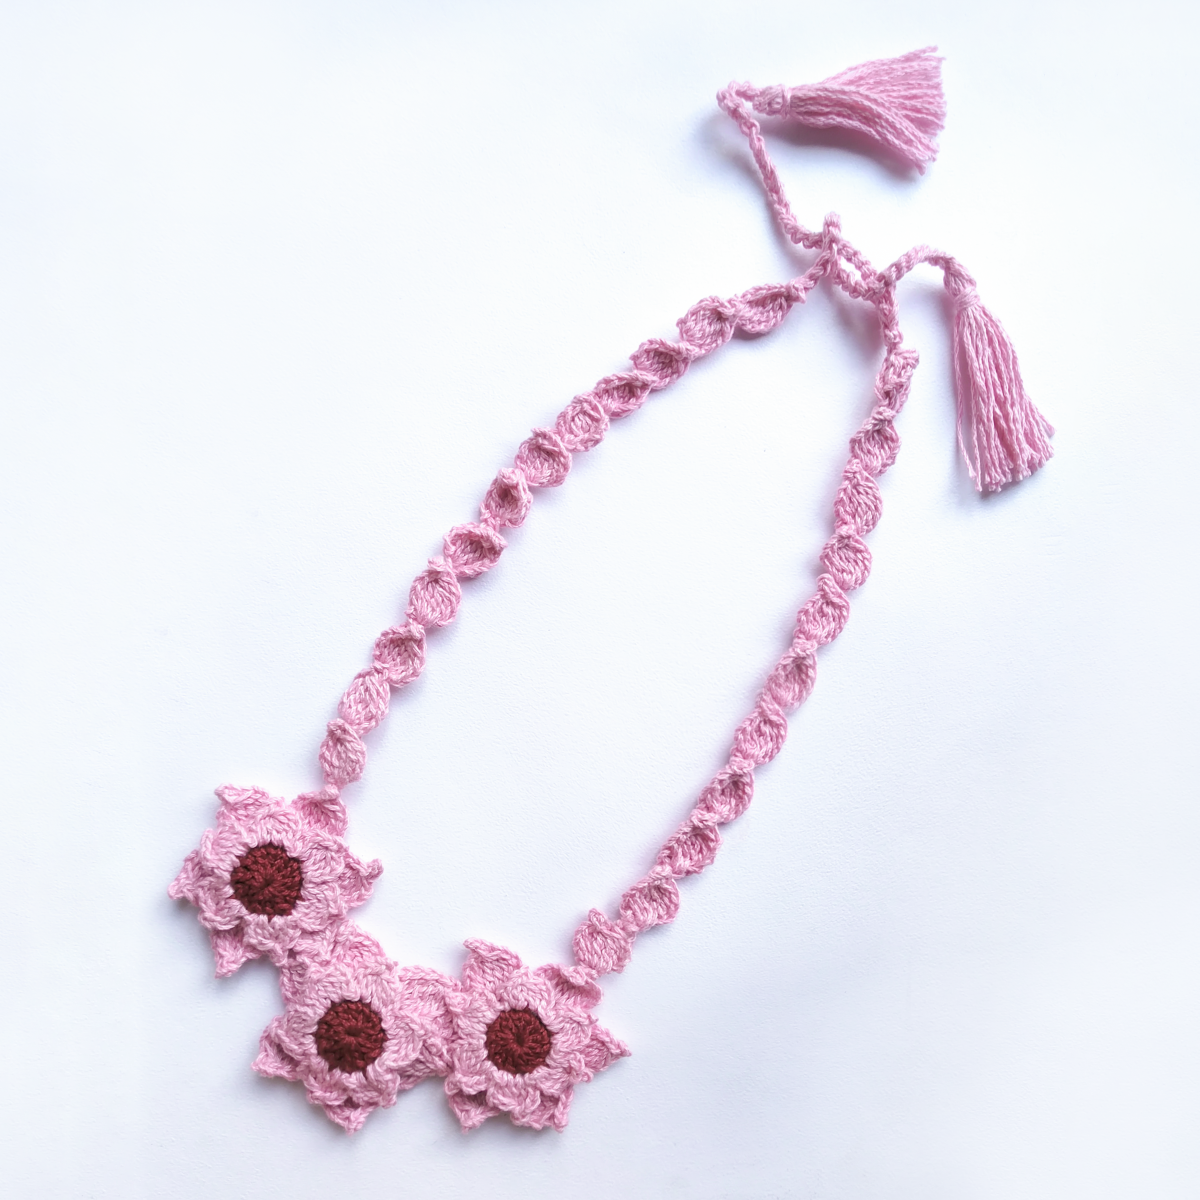 Blossom Handcrafted Crochet Set